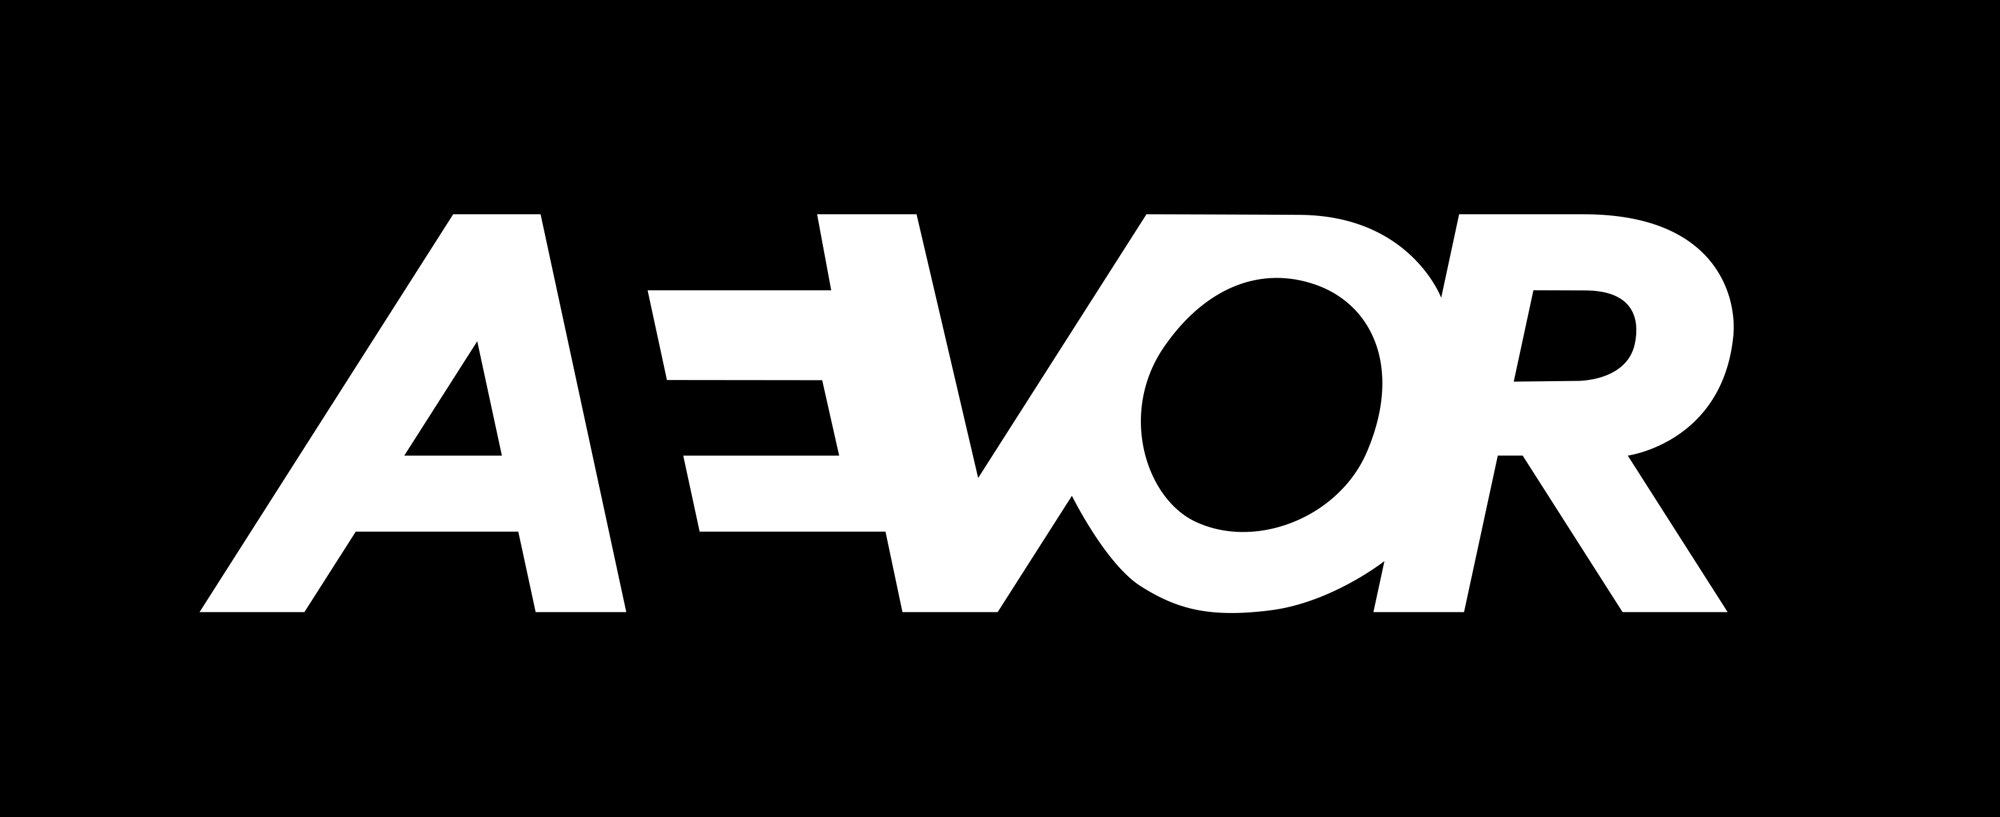 AEVOR Logo Cut Out black